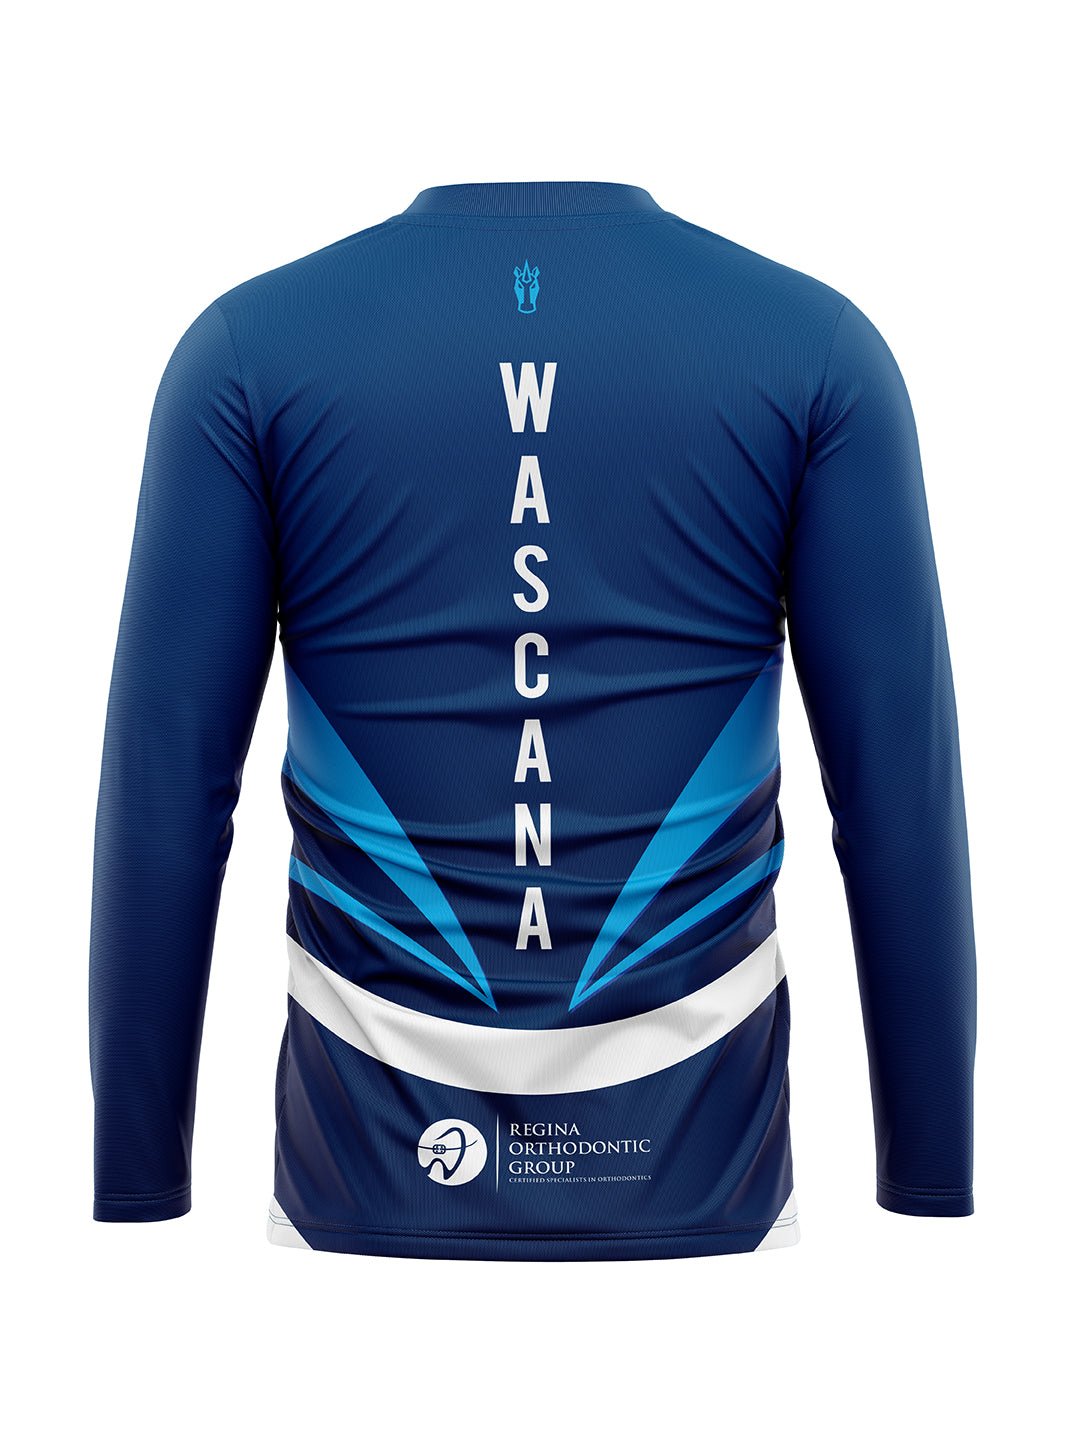 Wascana Men's Team Jersey Long Sleeve - Oddball Workshop